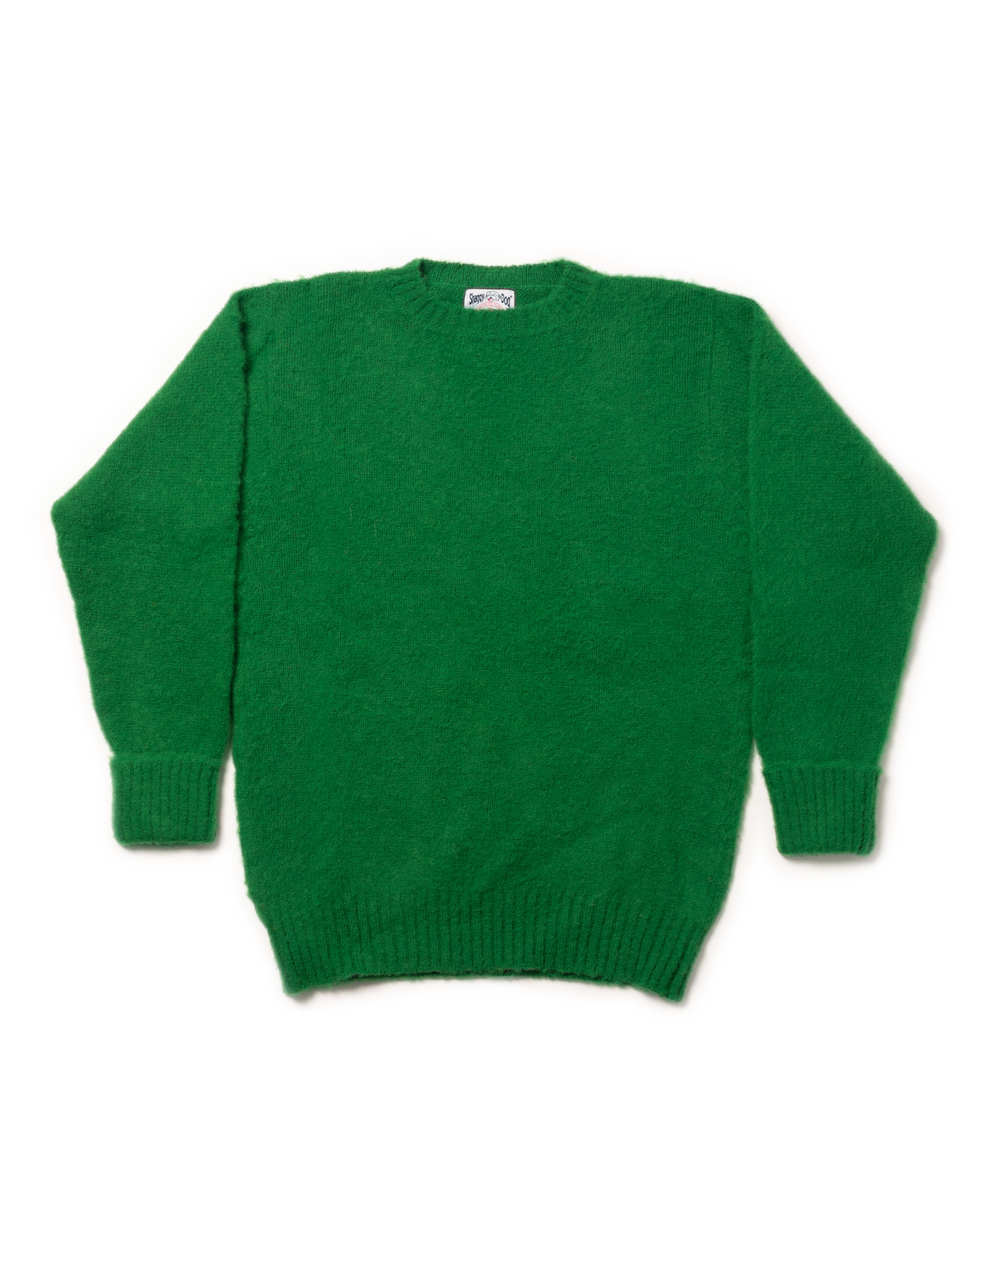 Shaggy Dog Sweater Kelly Green - Classic Fit | Men's Sweaters – J. PRESS